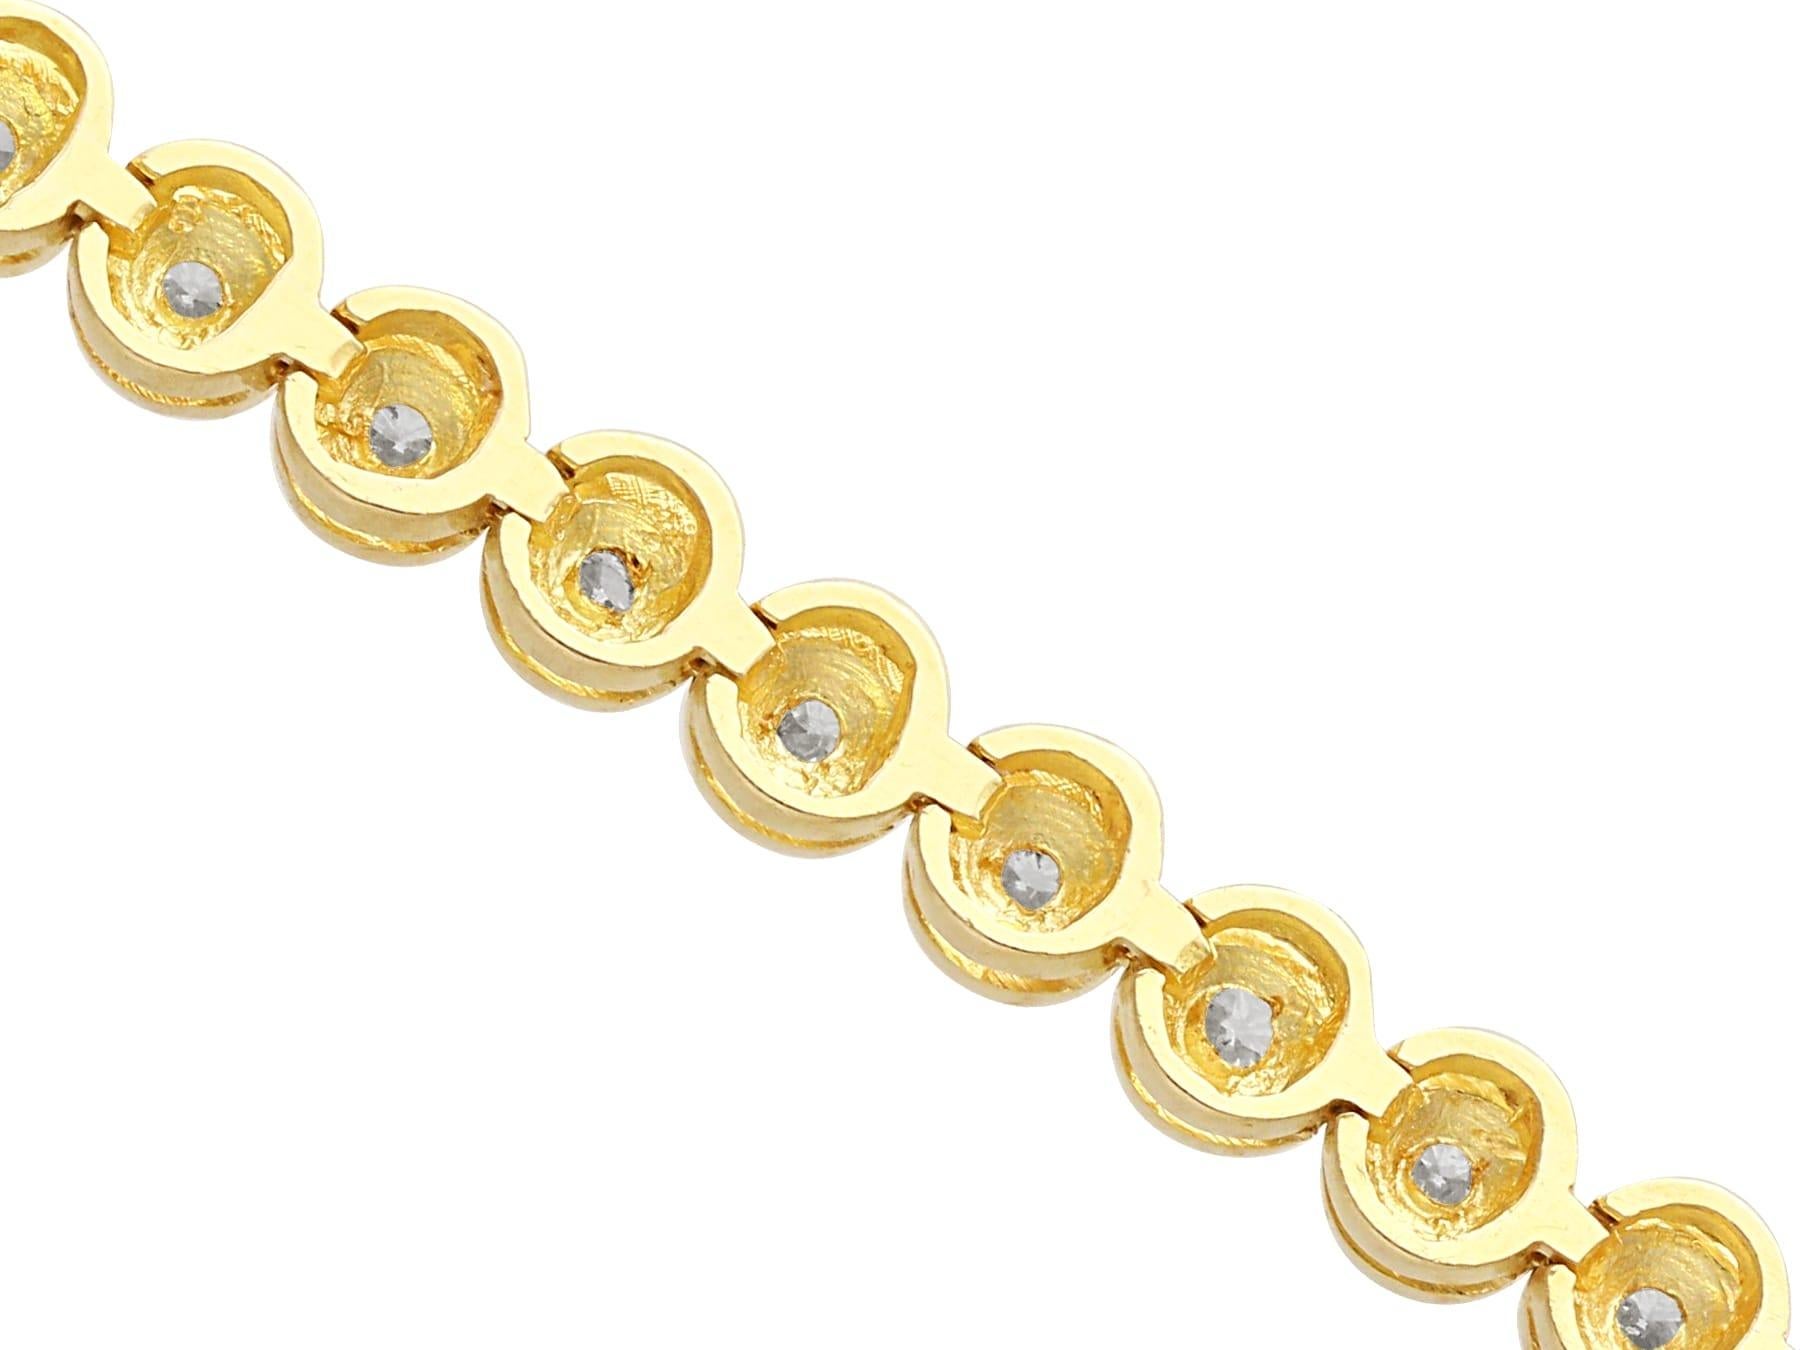 Vintage 2.25 Carat Diamond and 18k Yellow Gold Tennis Bracelet For Sale 1